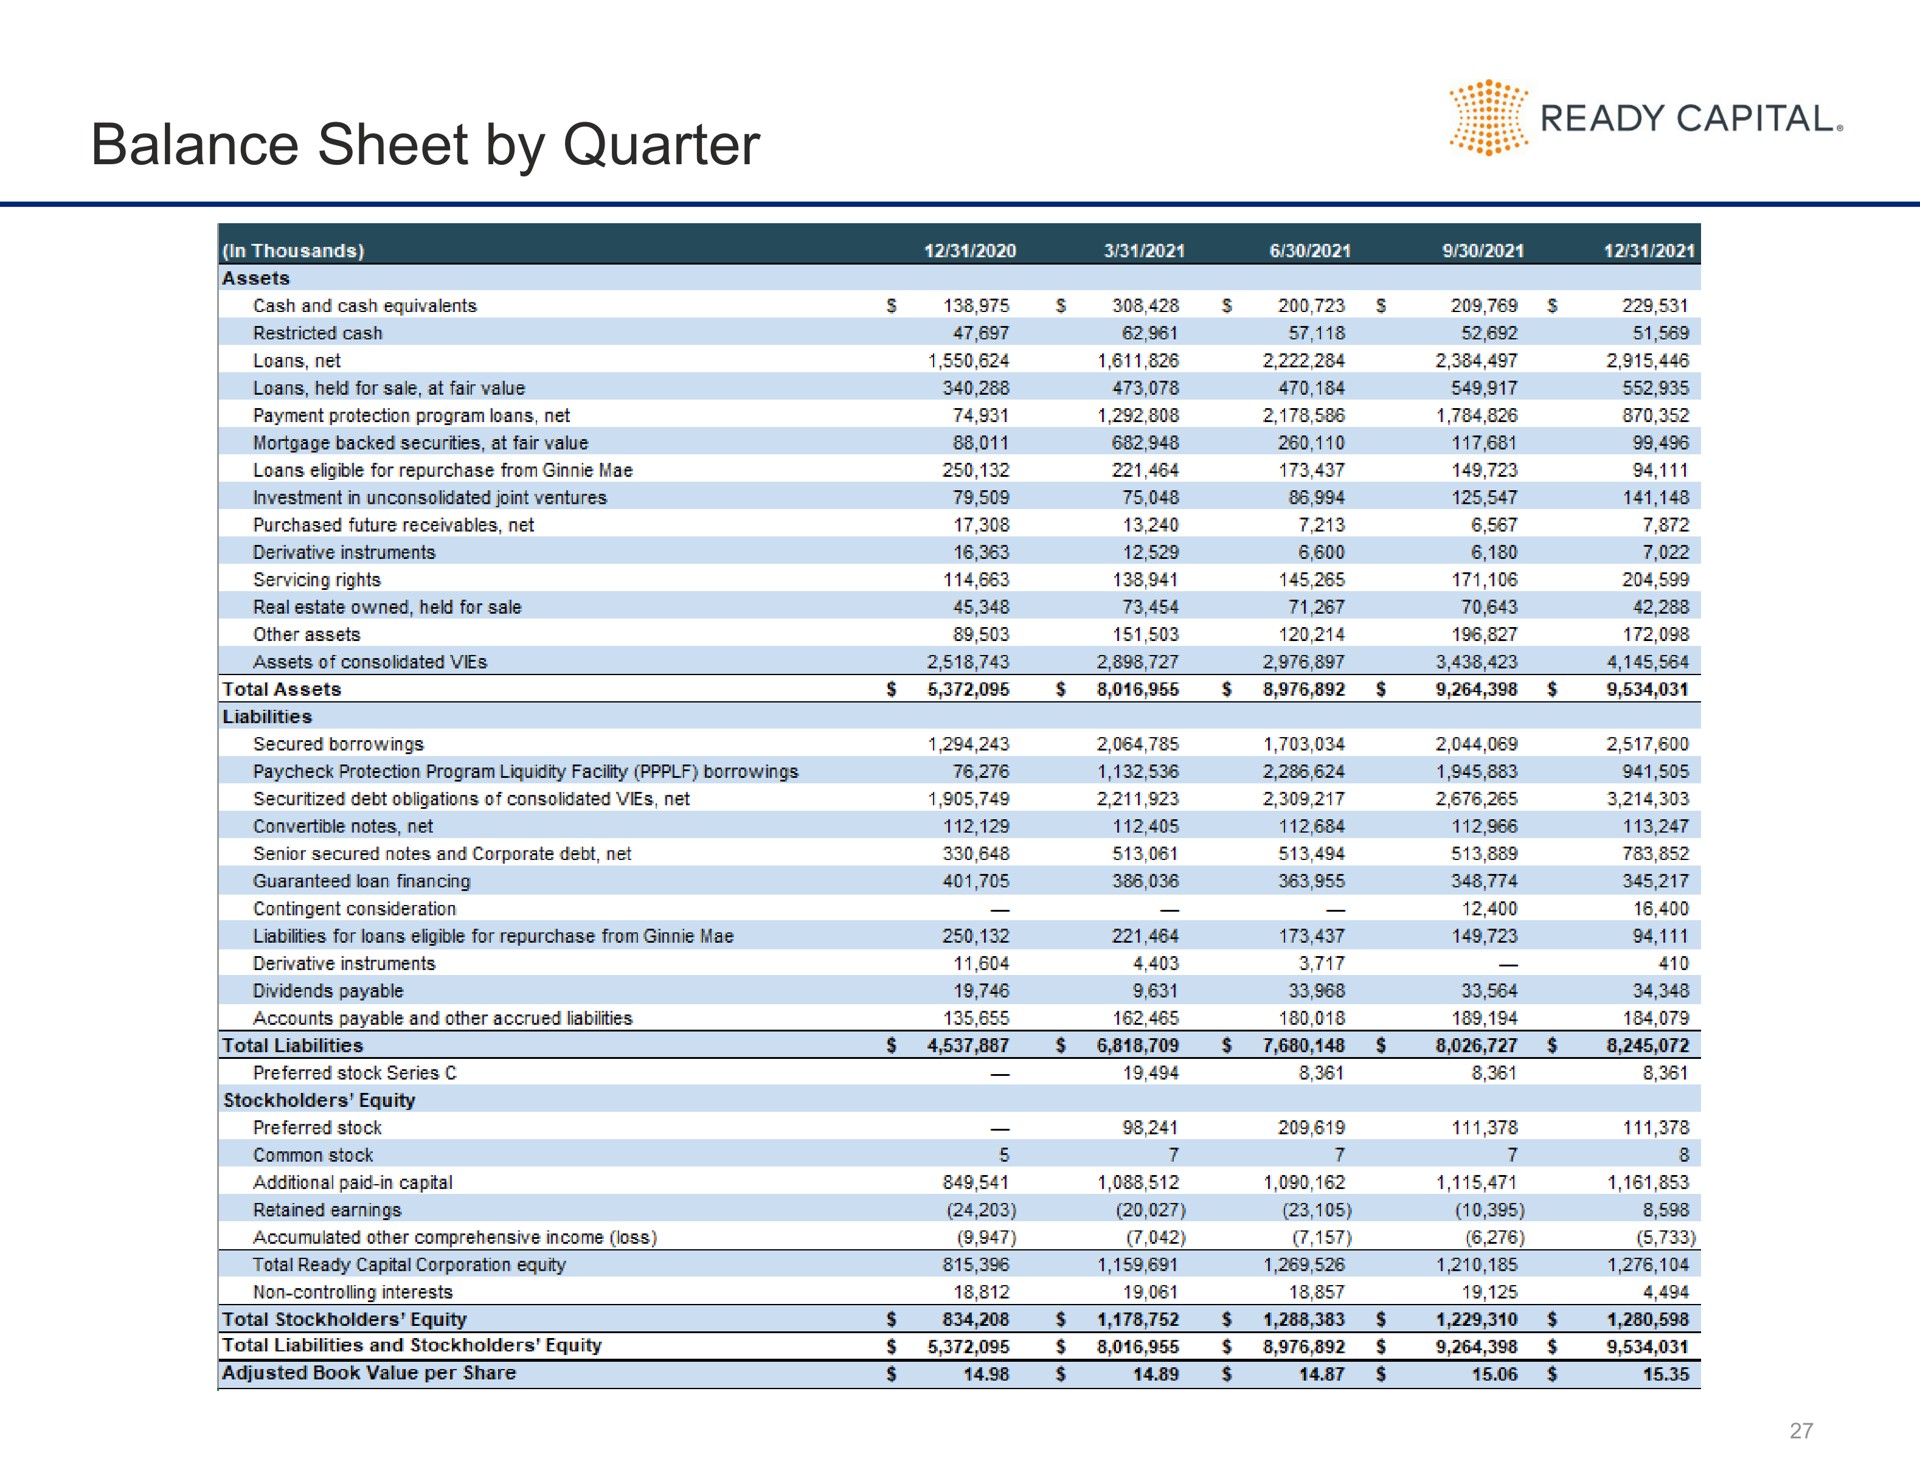 balance sheet by quarter ready capital a | Ready Capital